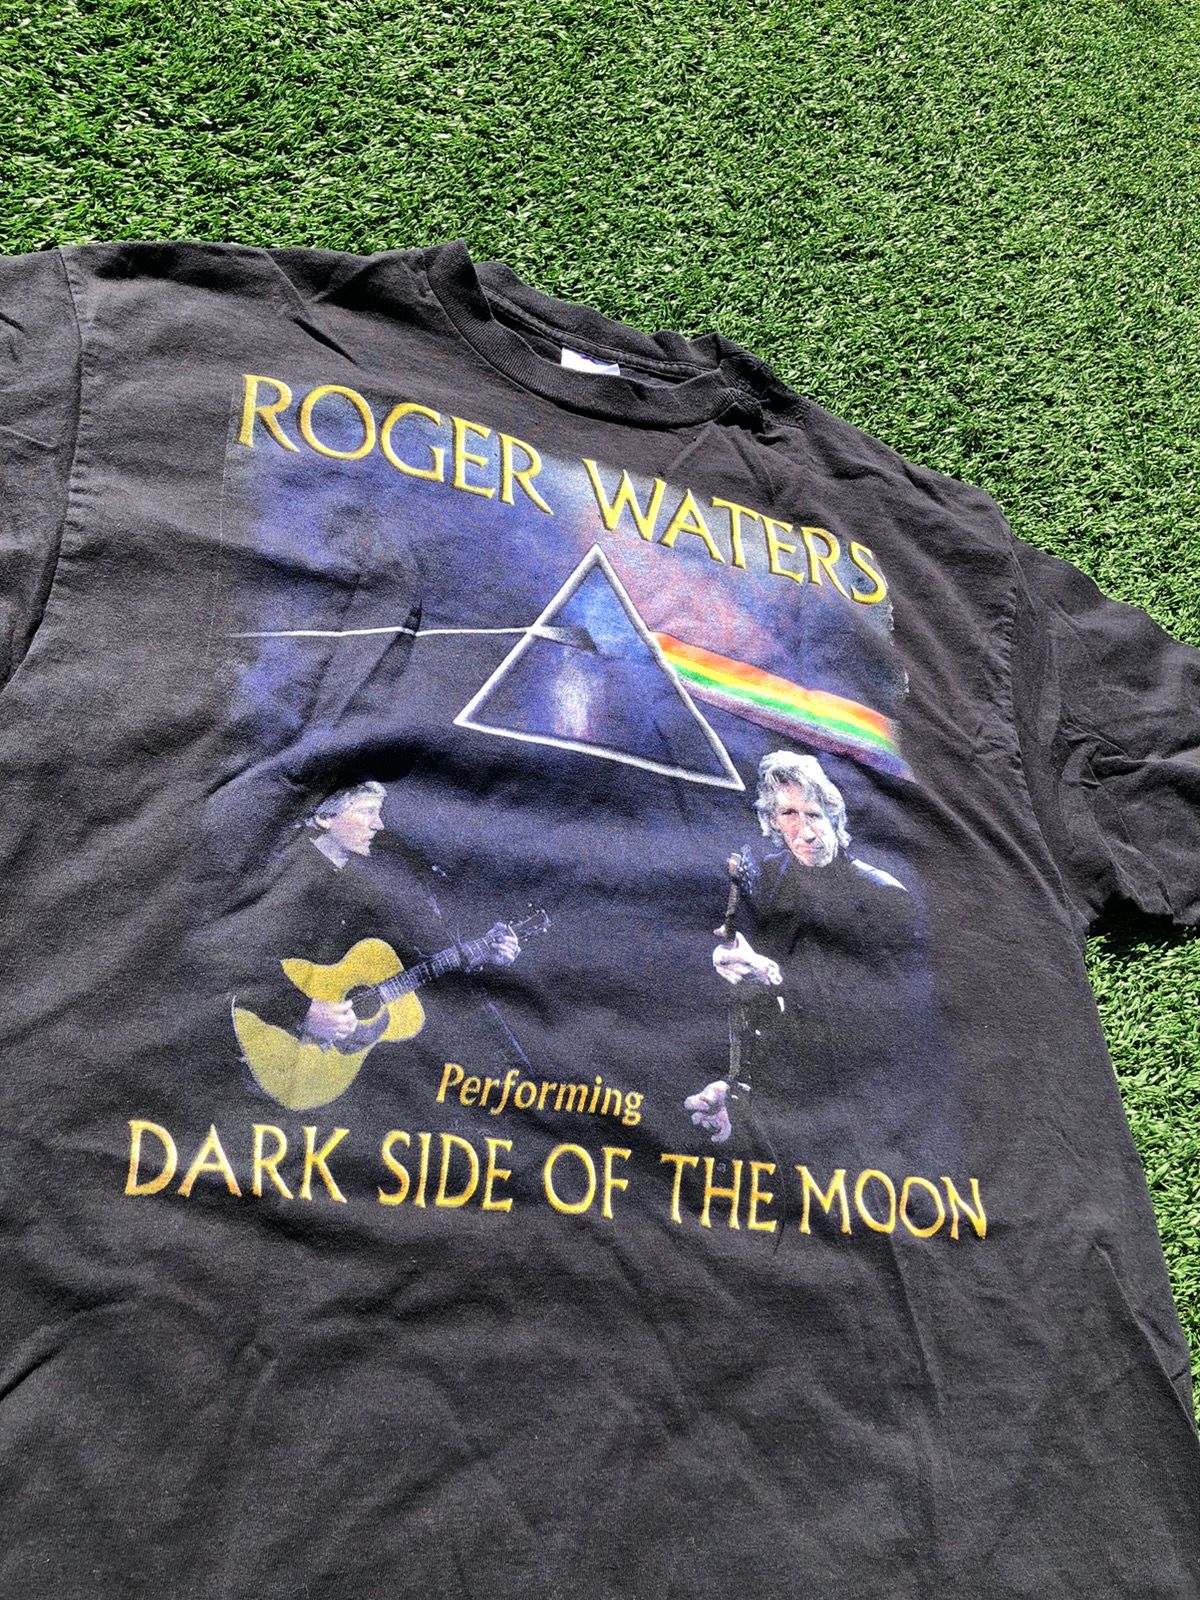 Vintage Vintage Pink Floyd Roger Waters Tour Shirt Size US L / EU 52-54 / 3 - 2 Preview